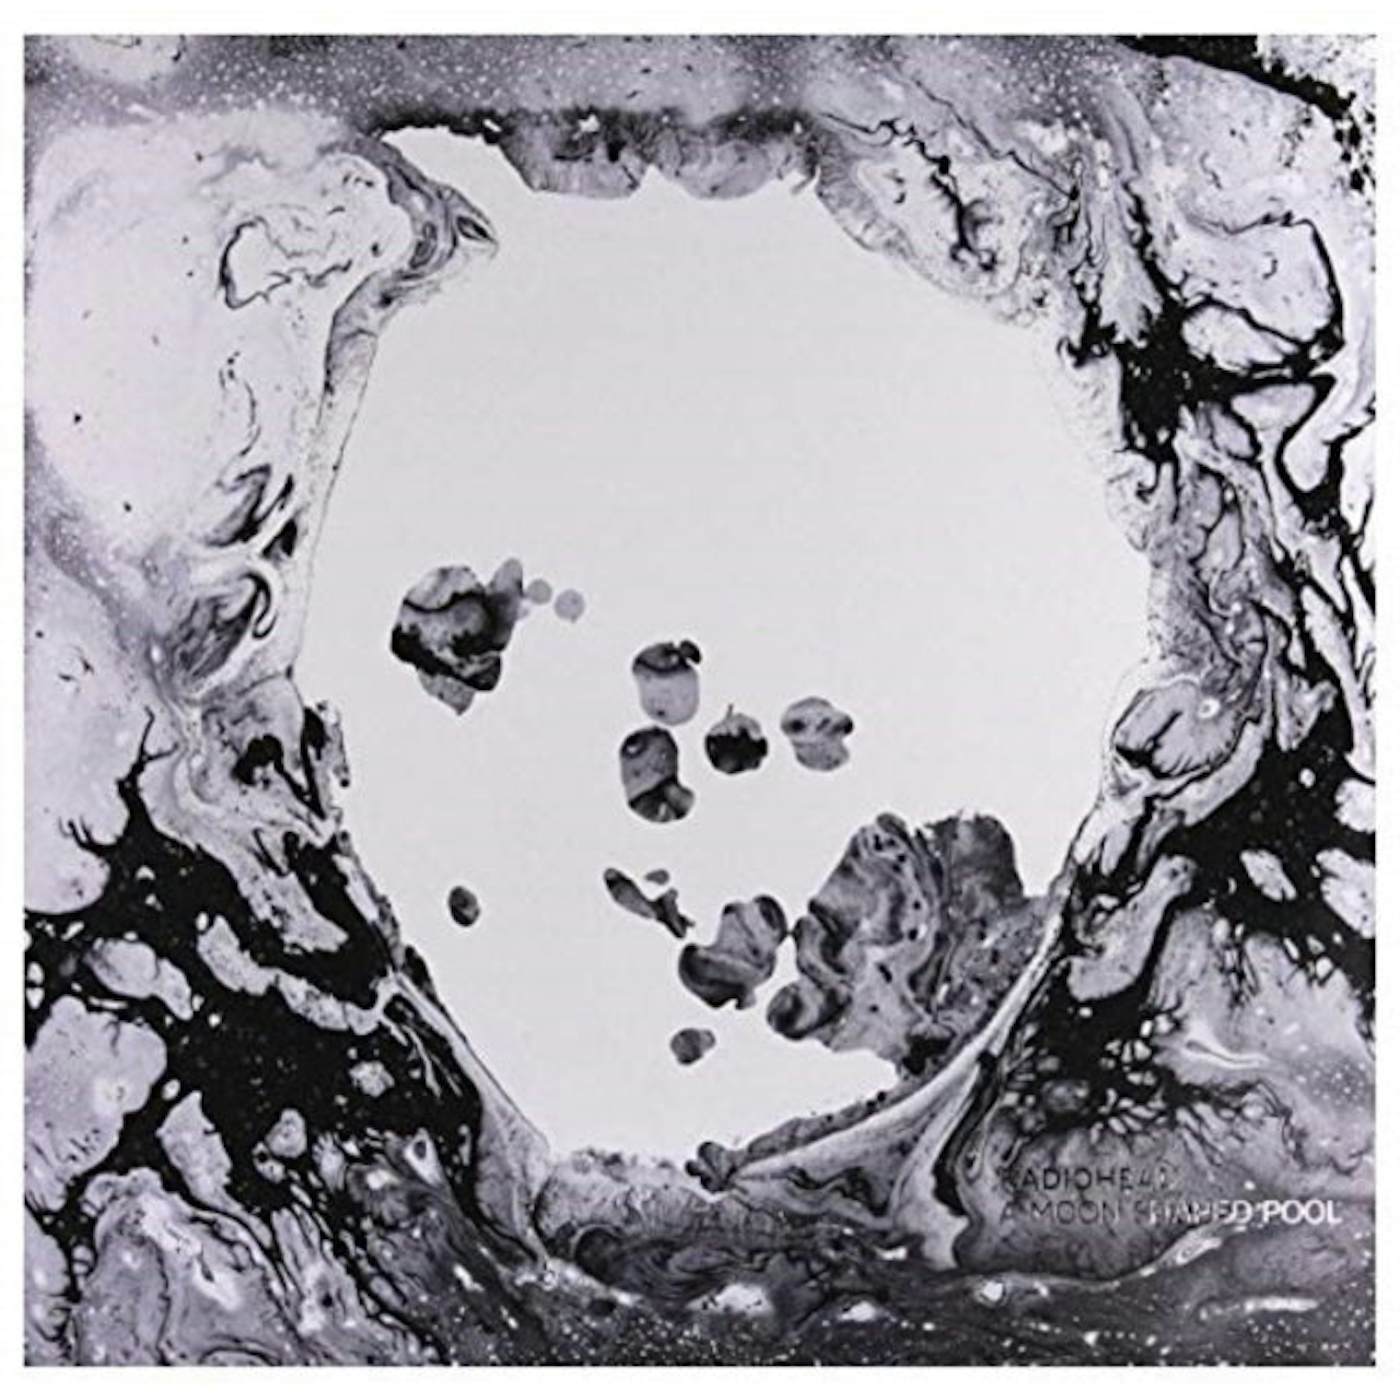 Radiohead LP Vinyl Record - A Moon Shaped Pool